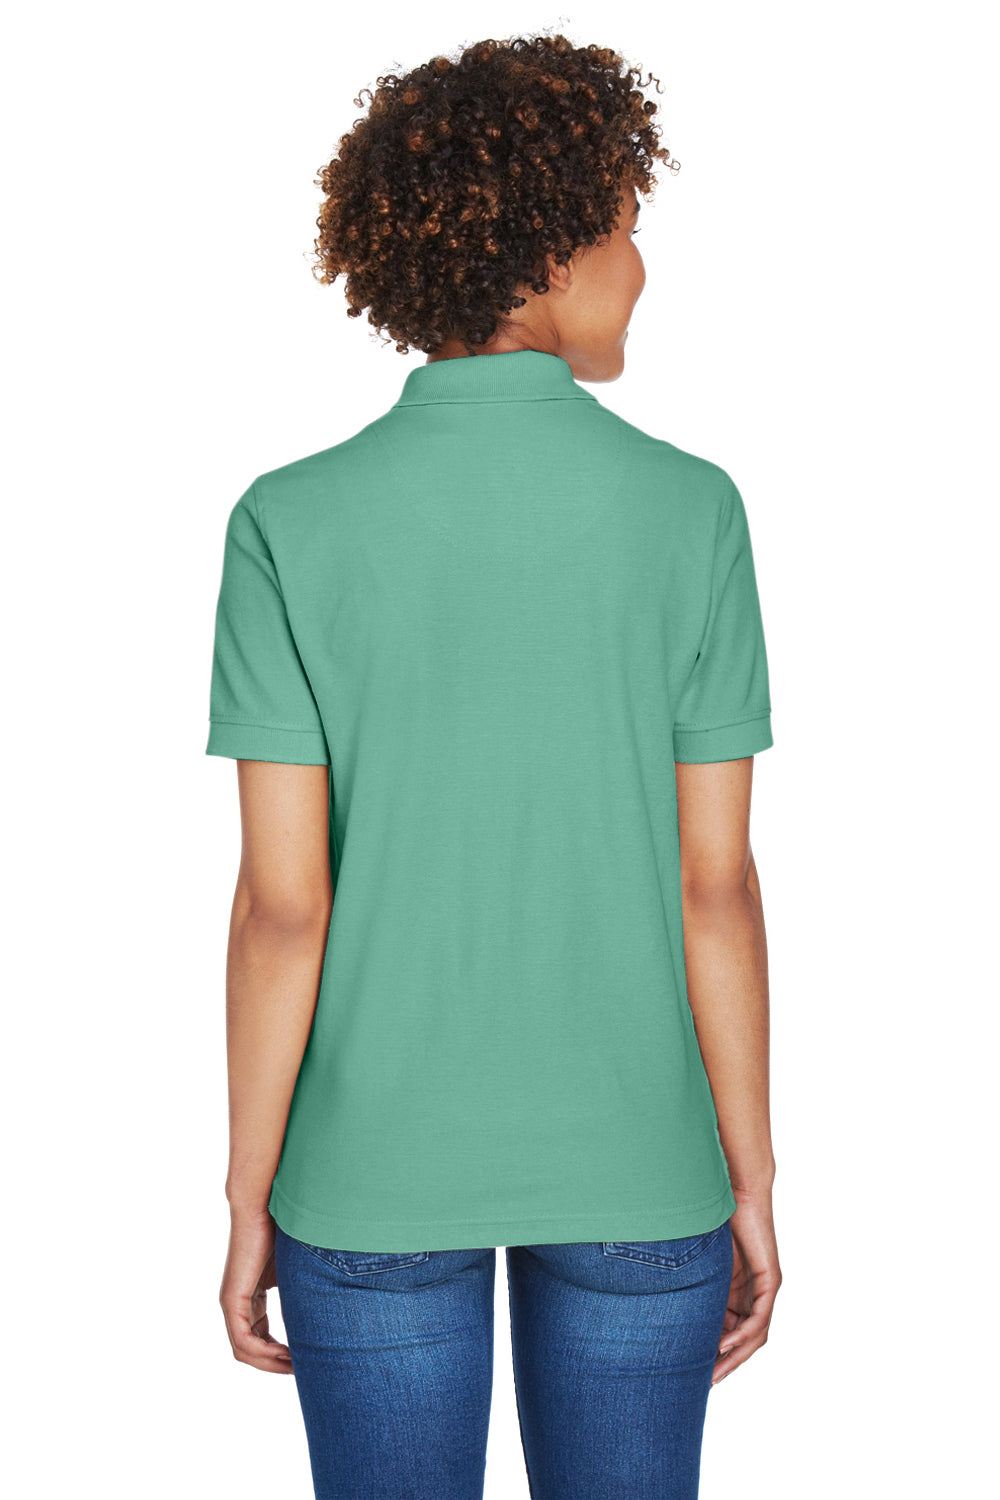 UltraClub 8541 Womens Whisper Short Sleeve Polo Shirt Leaf Green Back